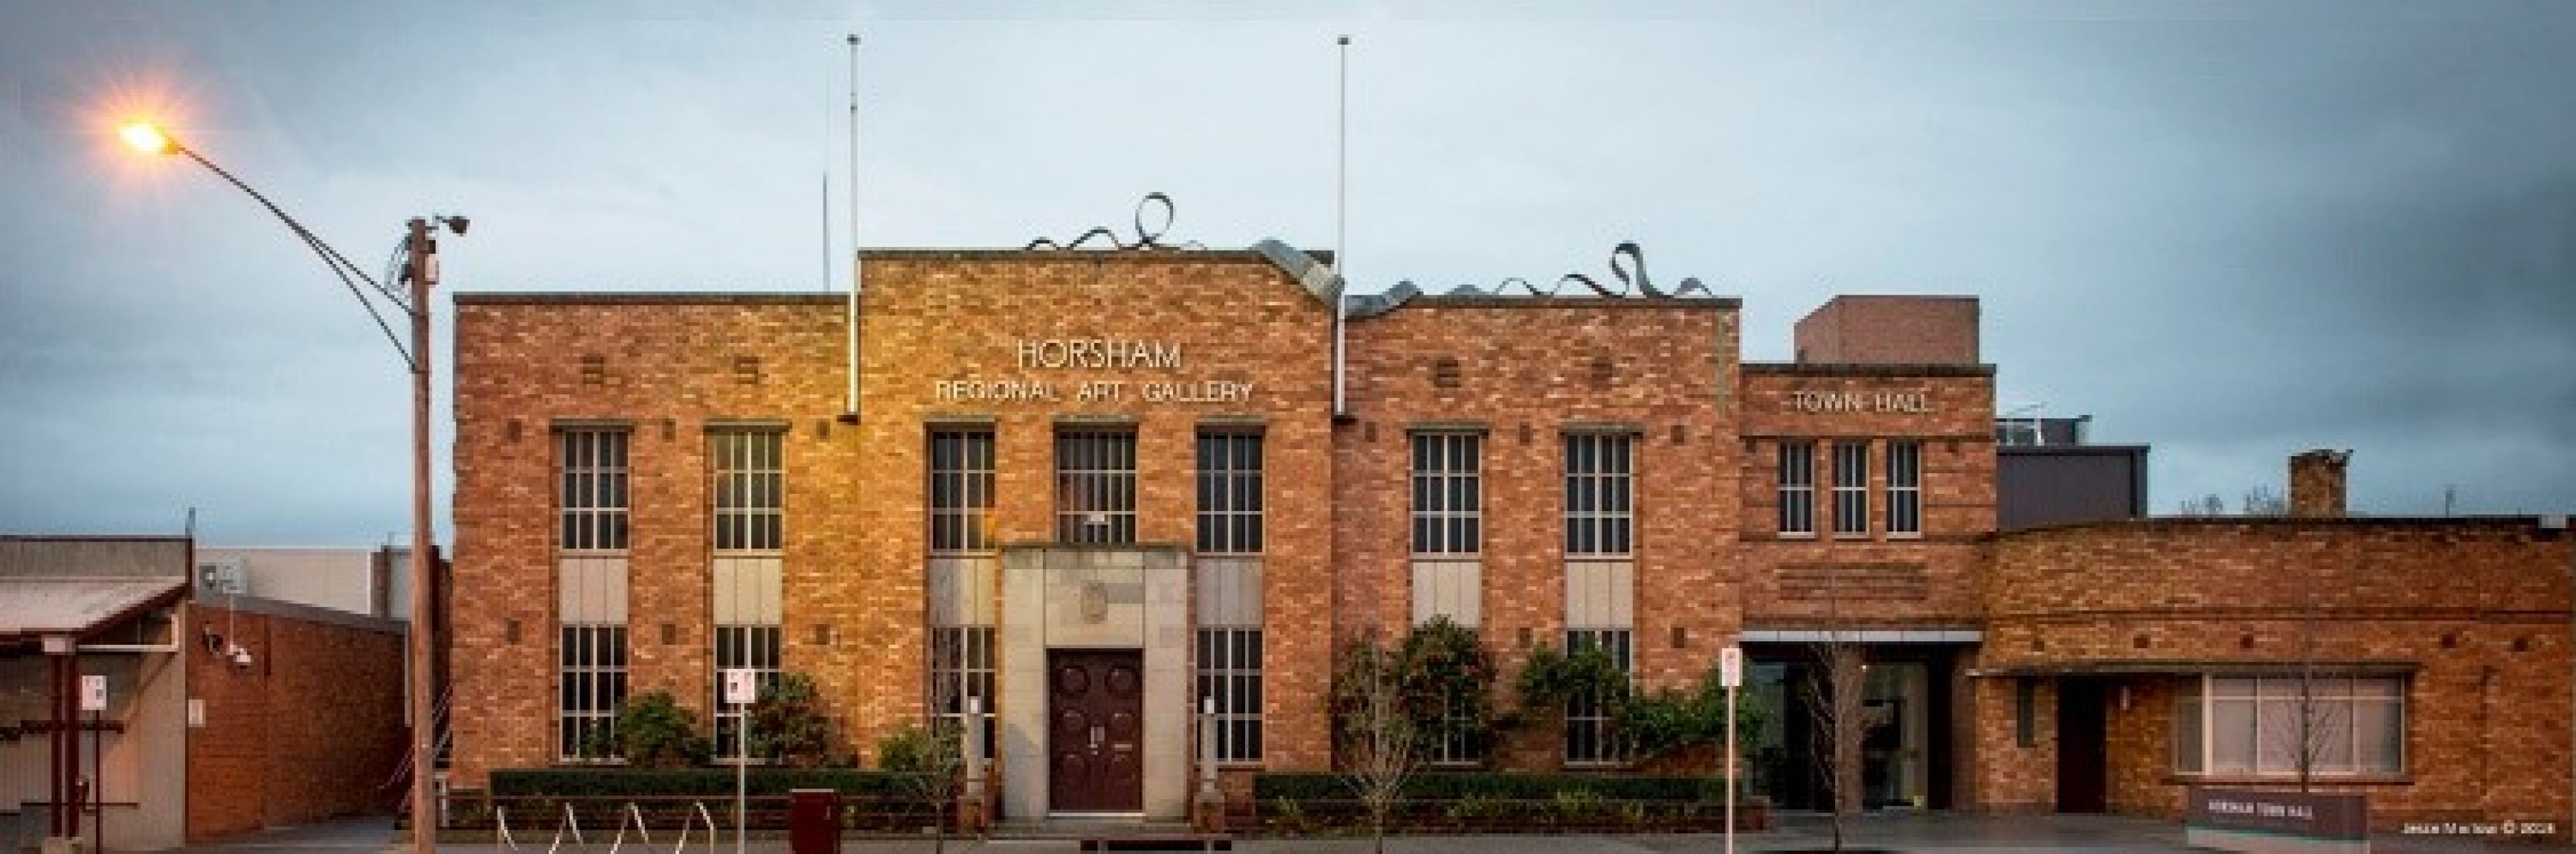 Horsham Town Hall